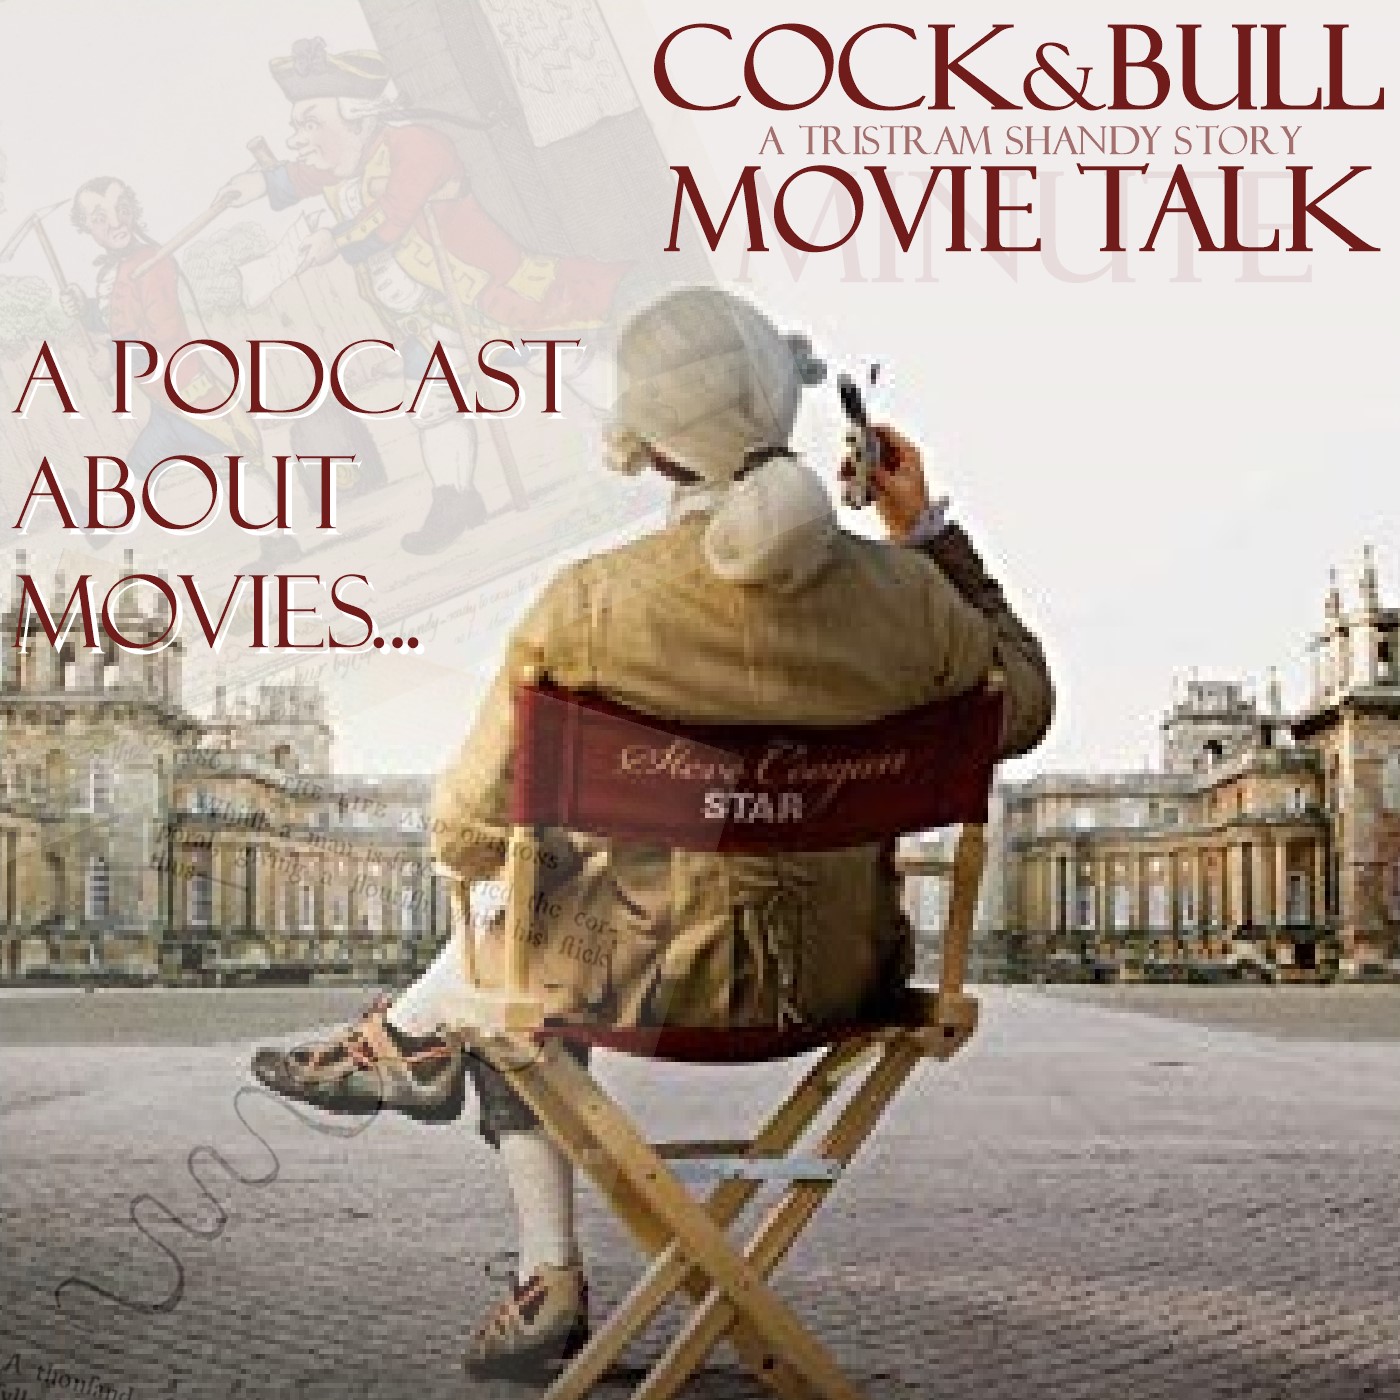 cock & bull movie talk podcast